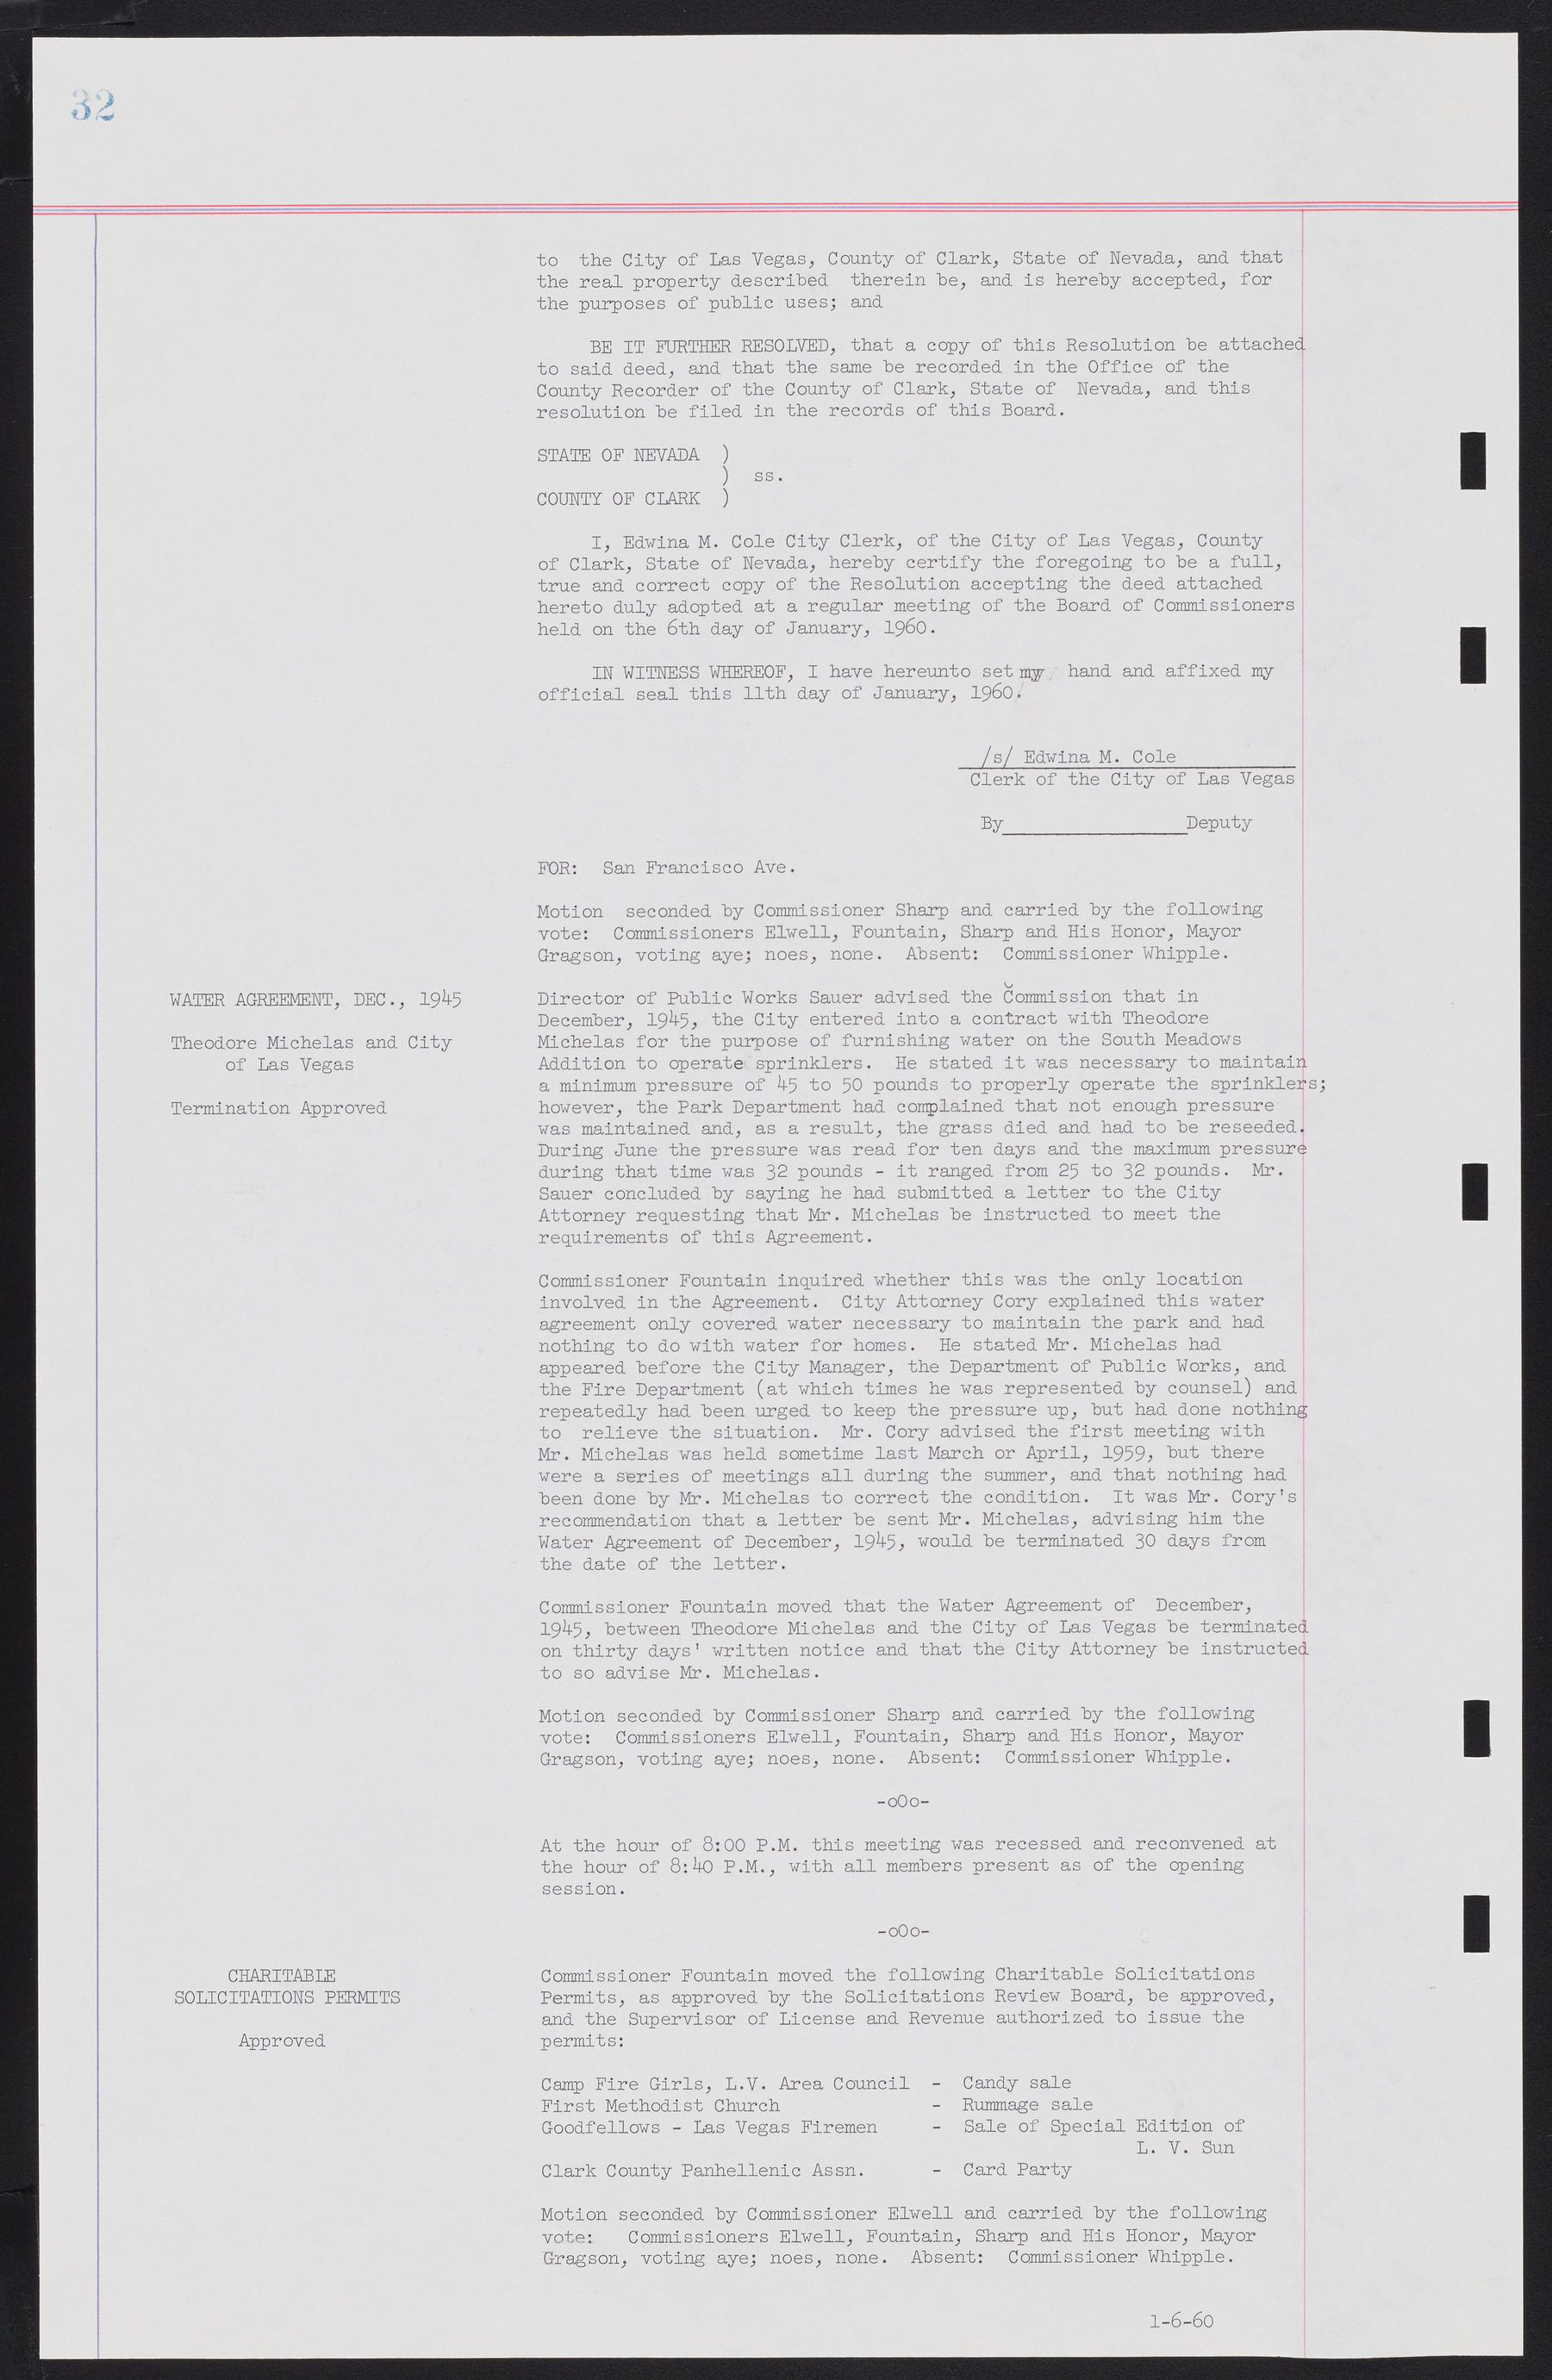 Las Vegas City Commission Minutes, December 8, 1959 to February 17, 1960, lvc000012-36